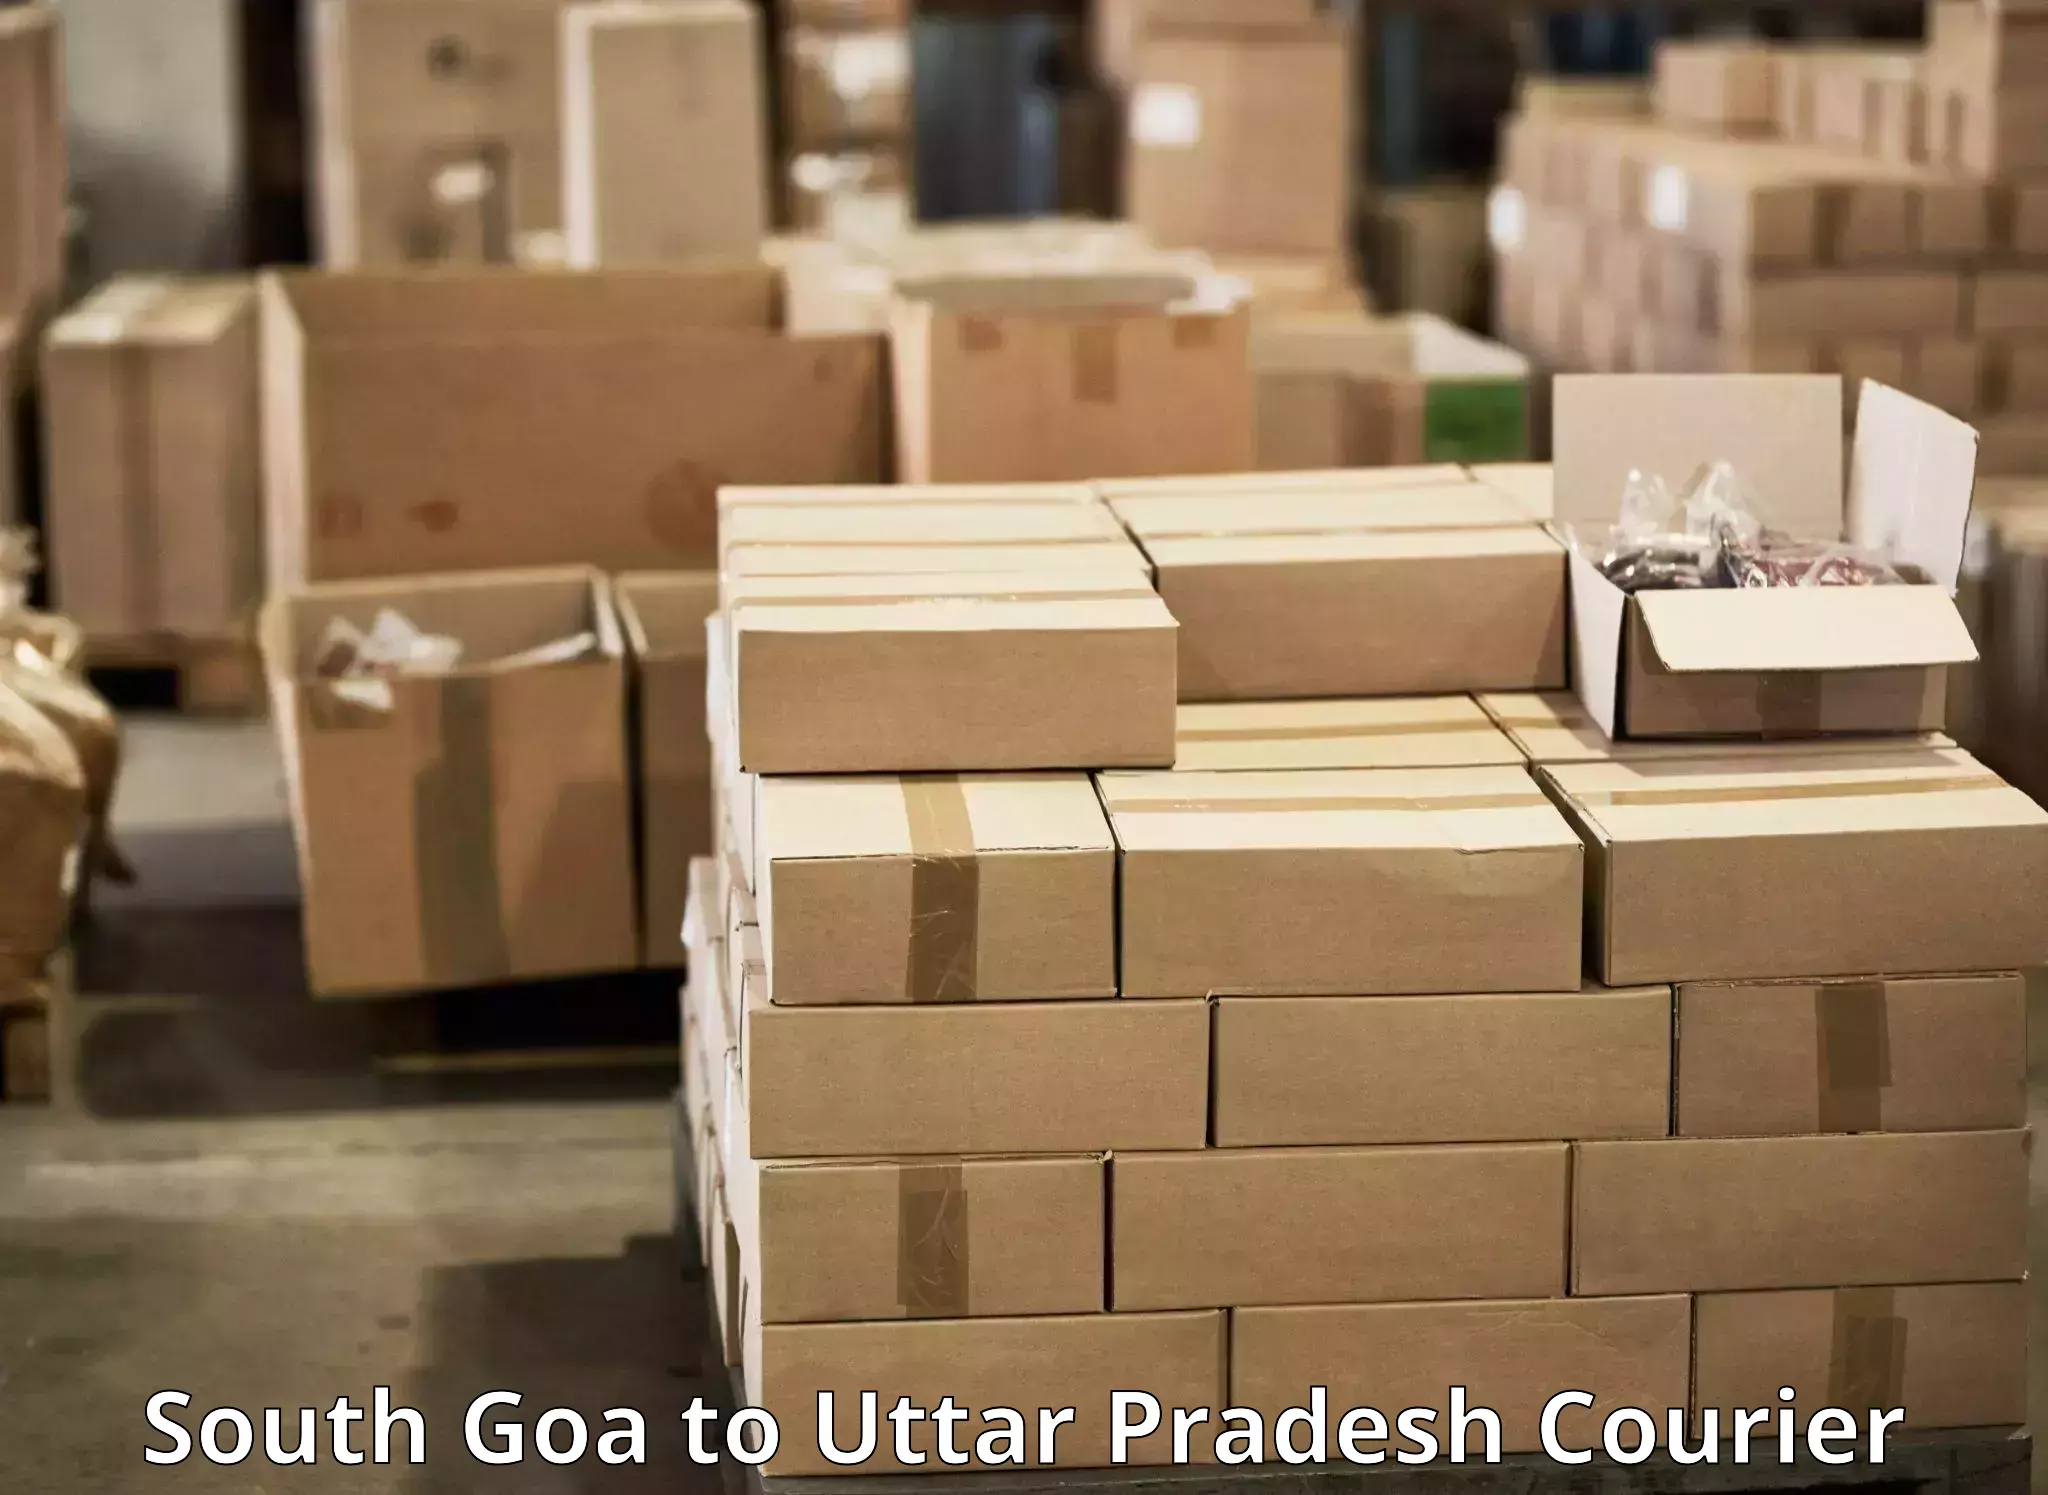 Courier service innovation South Goa to Kushinagar